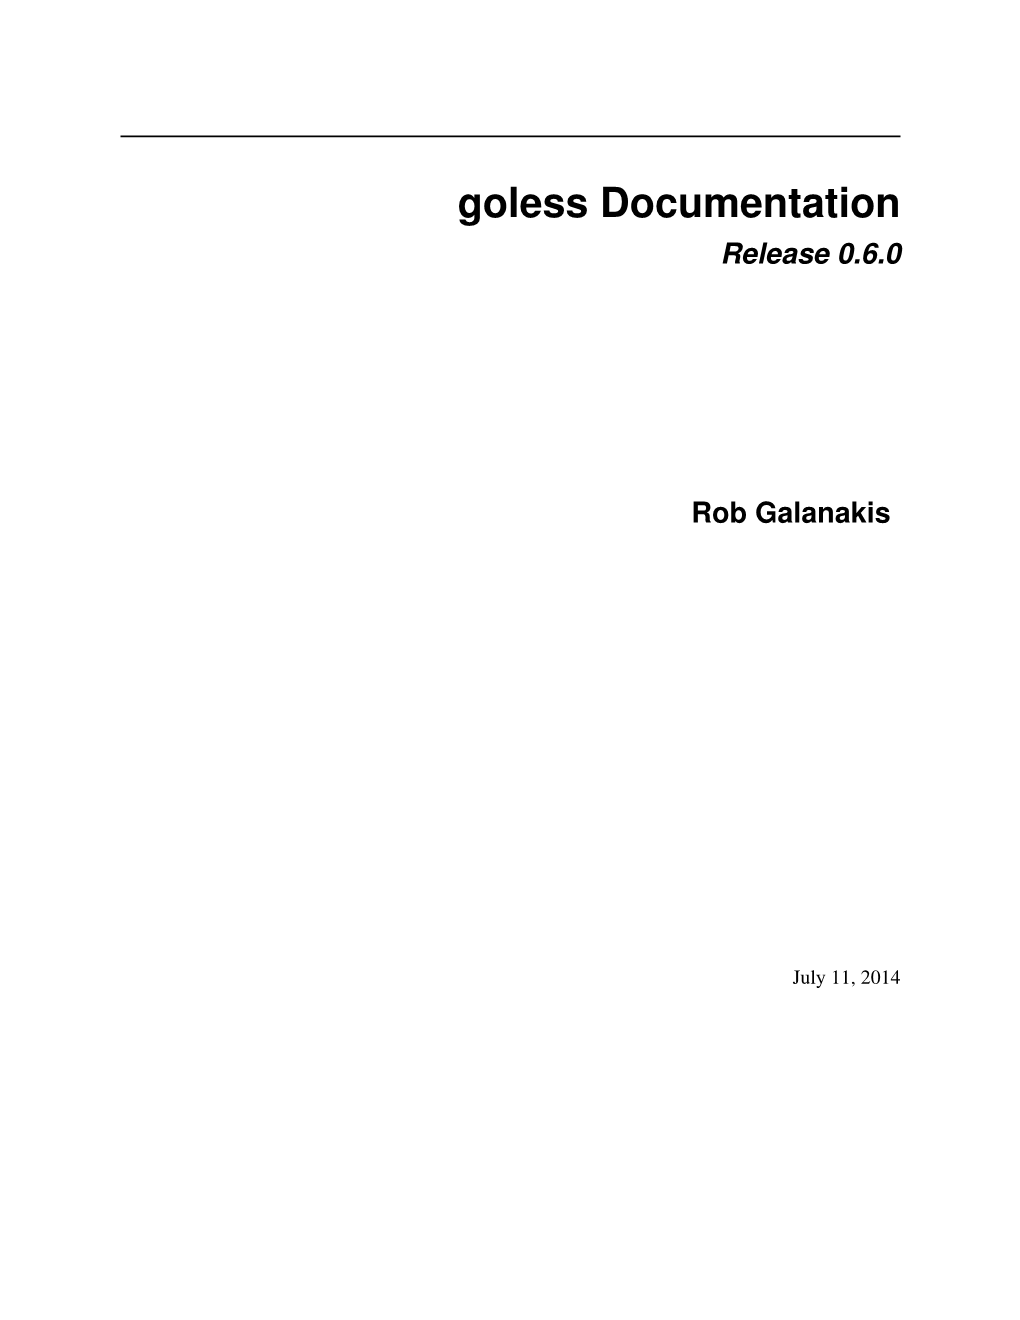 Goless Documentation Release 0.6.0